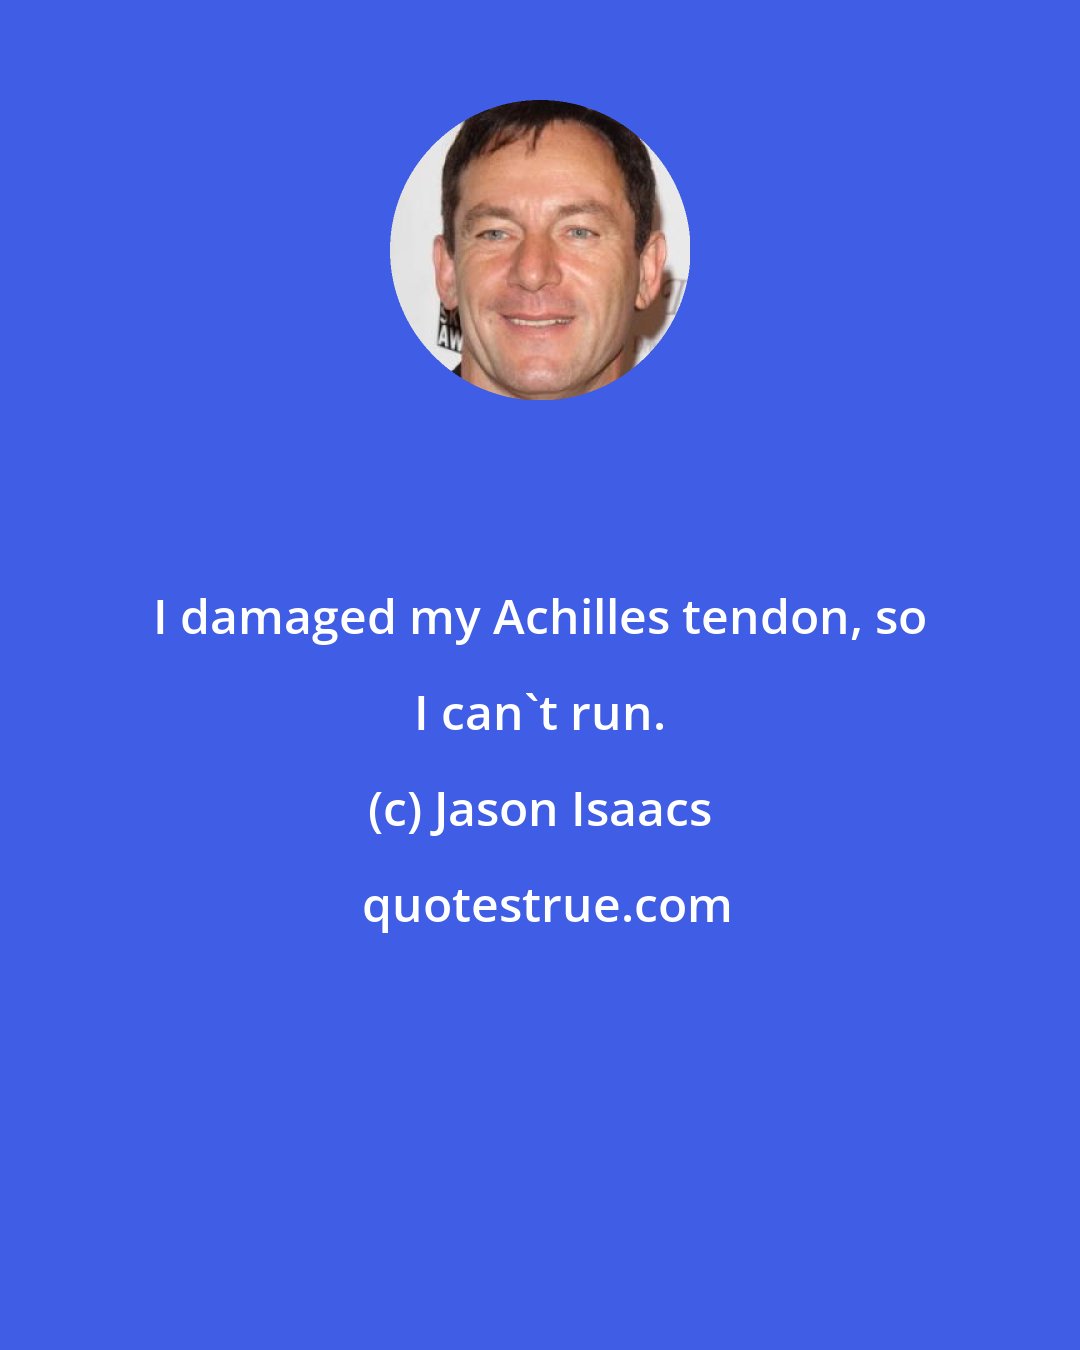 Jason Isaacs: I damaged my Achilles tendon, so I can't run.